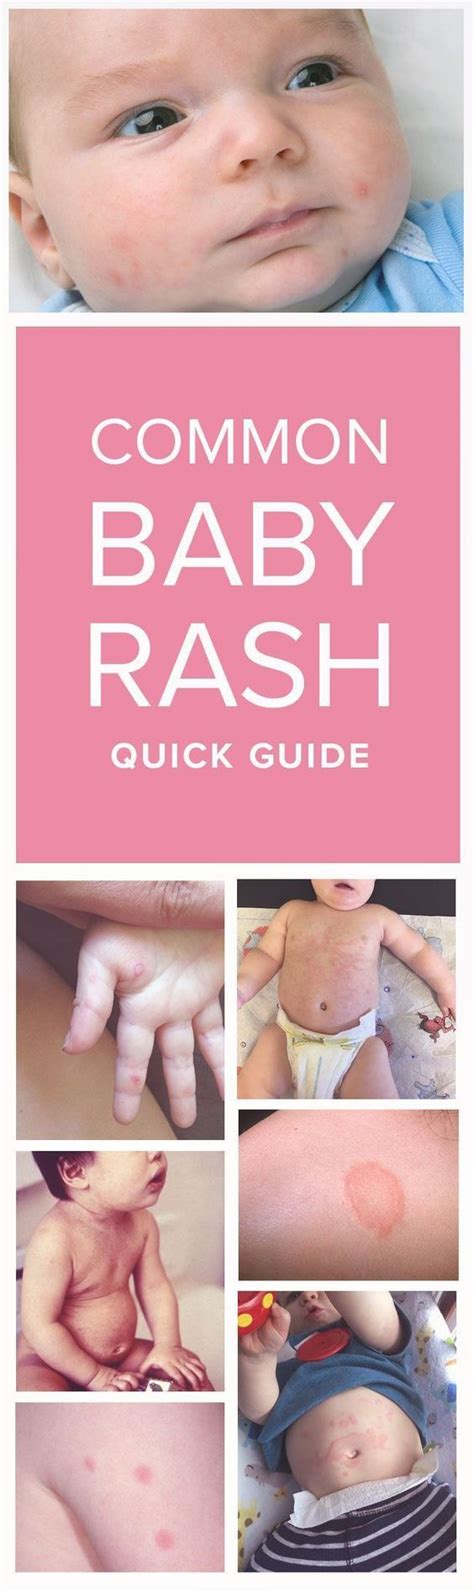 Baby Rash Visual Guide Images